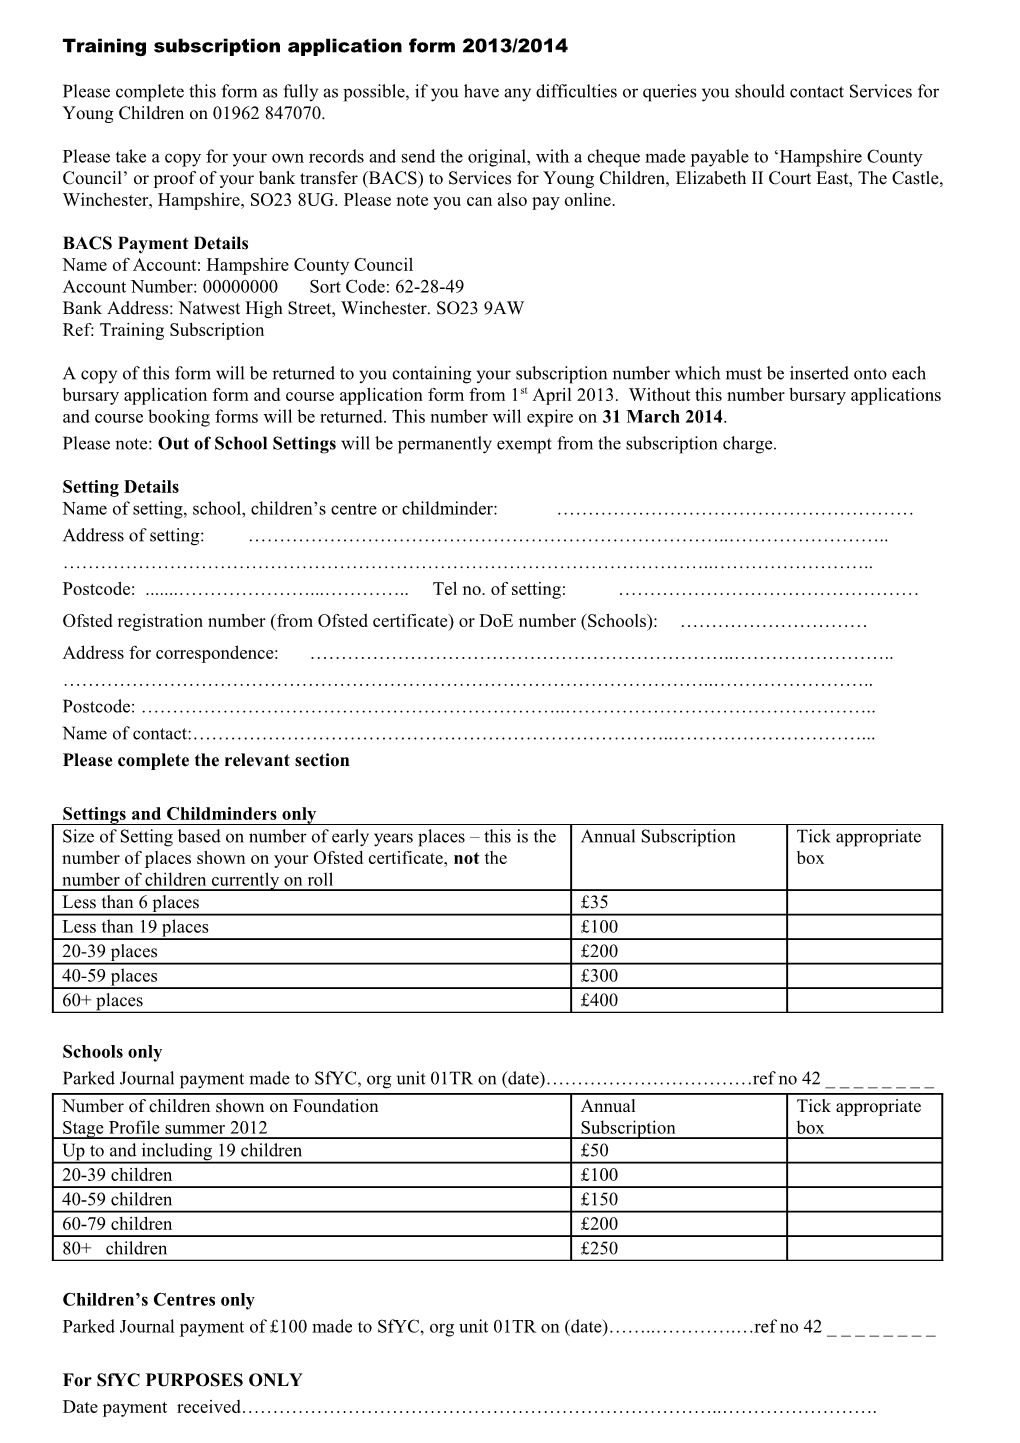 Training Subscription Application Form 2012/2013